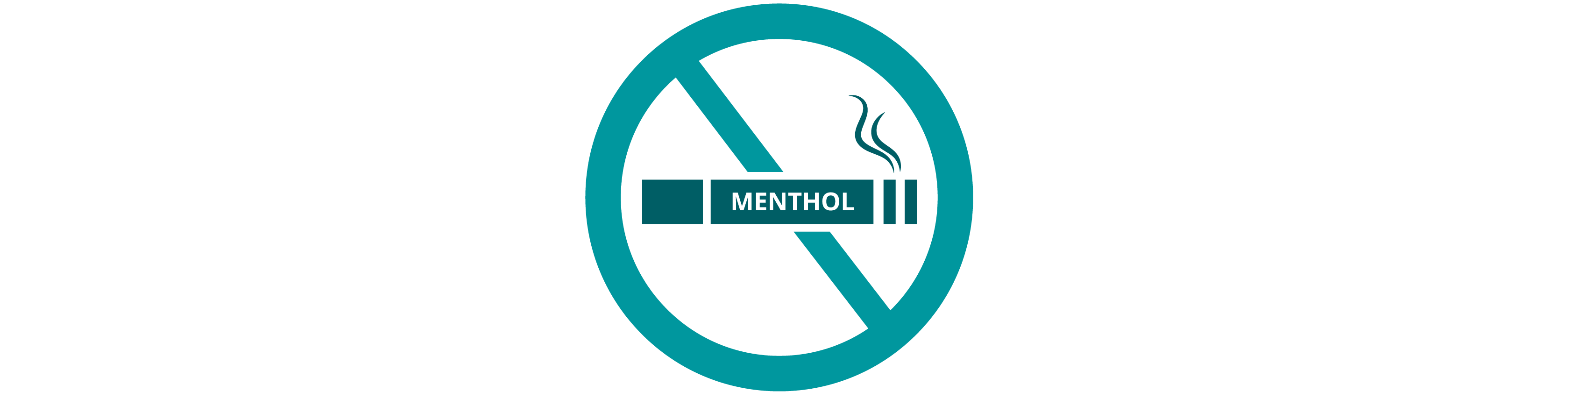 Philip Morris is not against the menthol cigarette ban